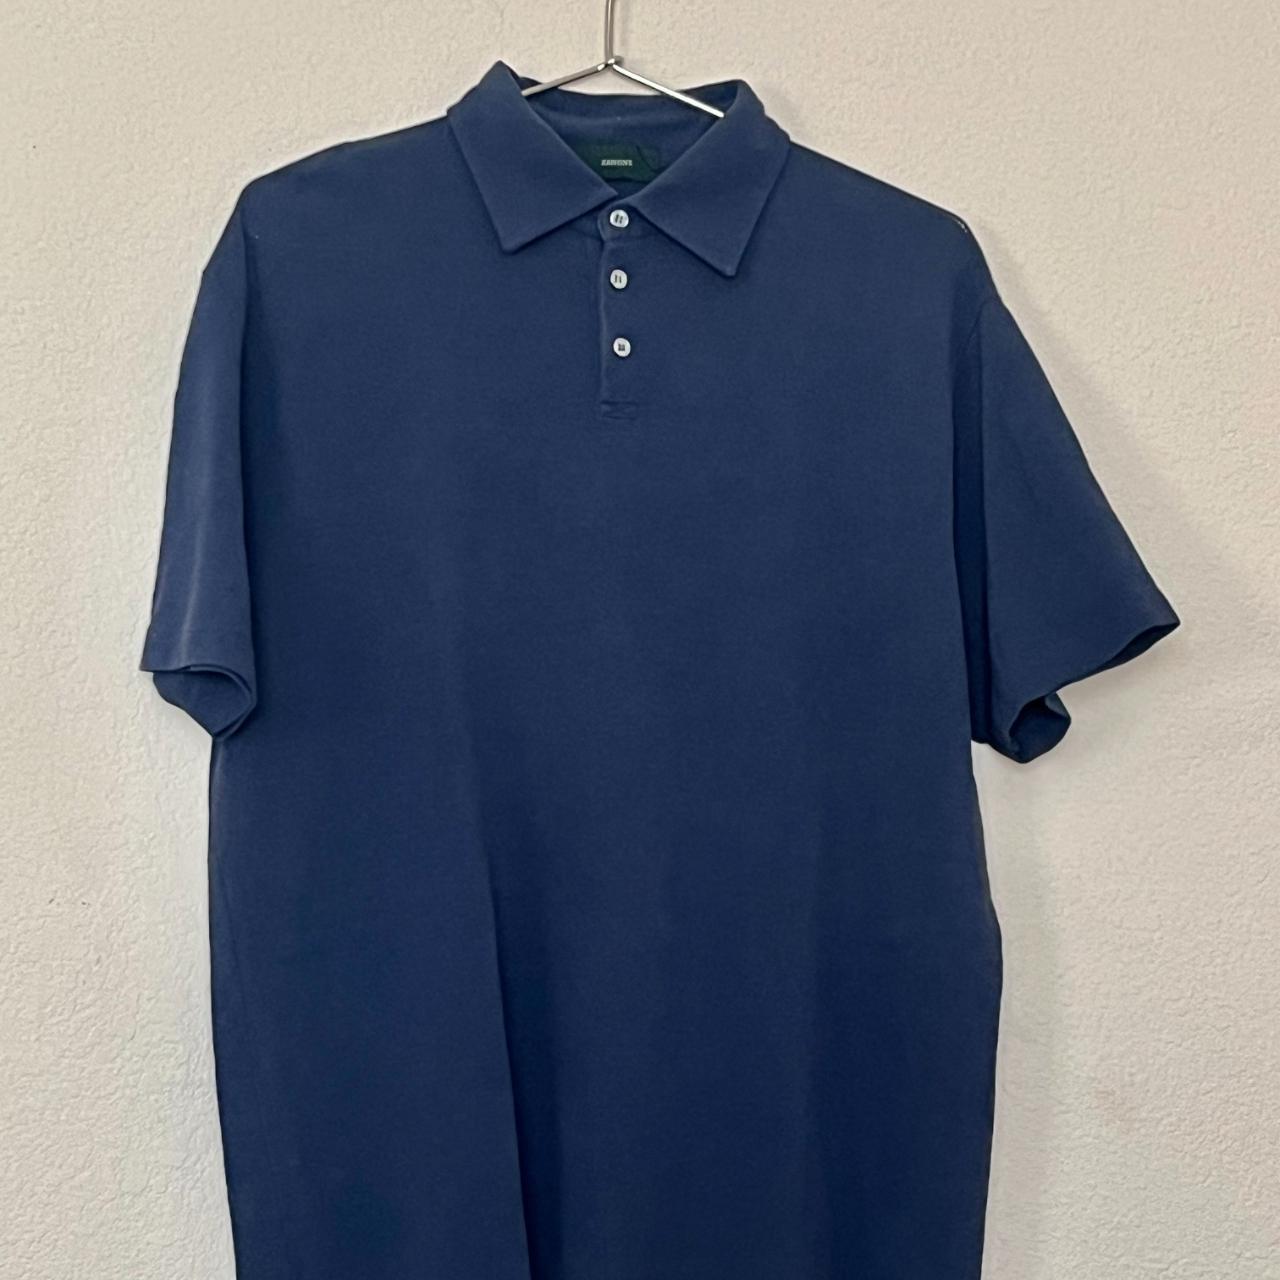 Zanone polo shirt Navy blue, thin mesh cotton (a... - Depop